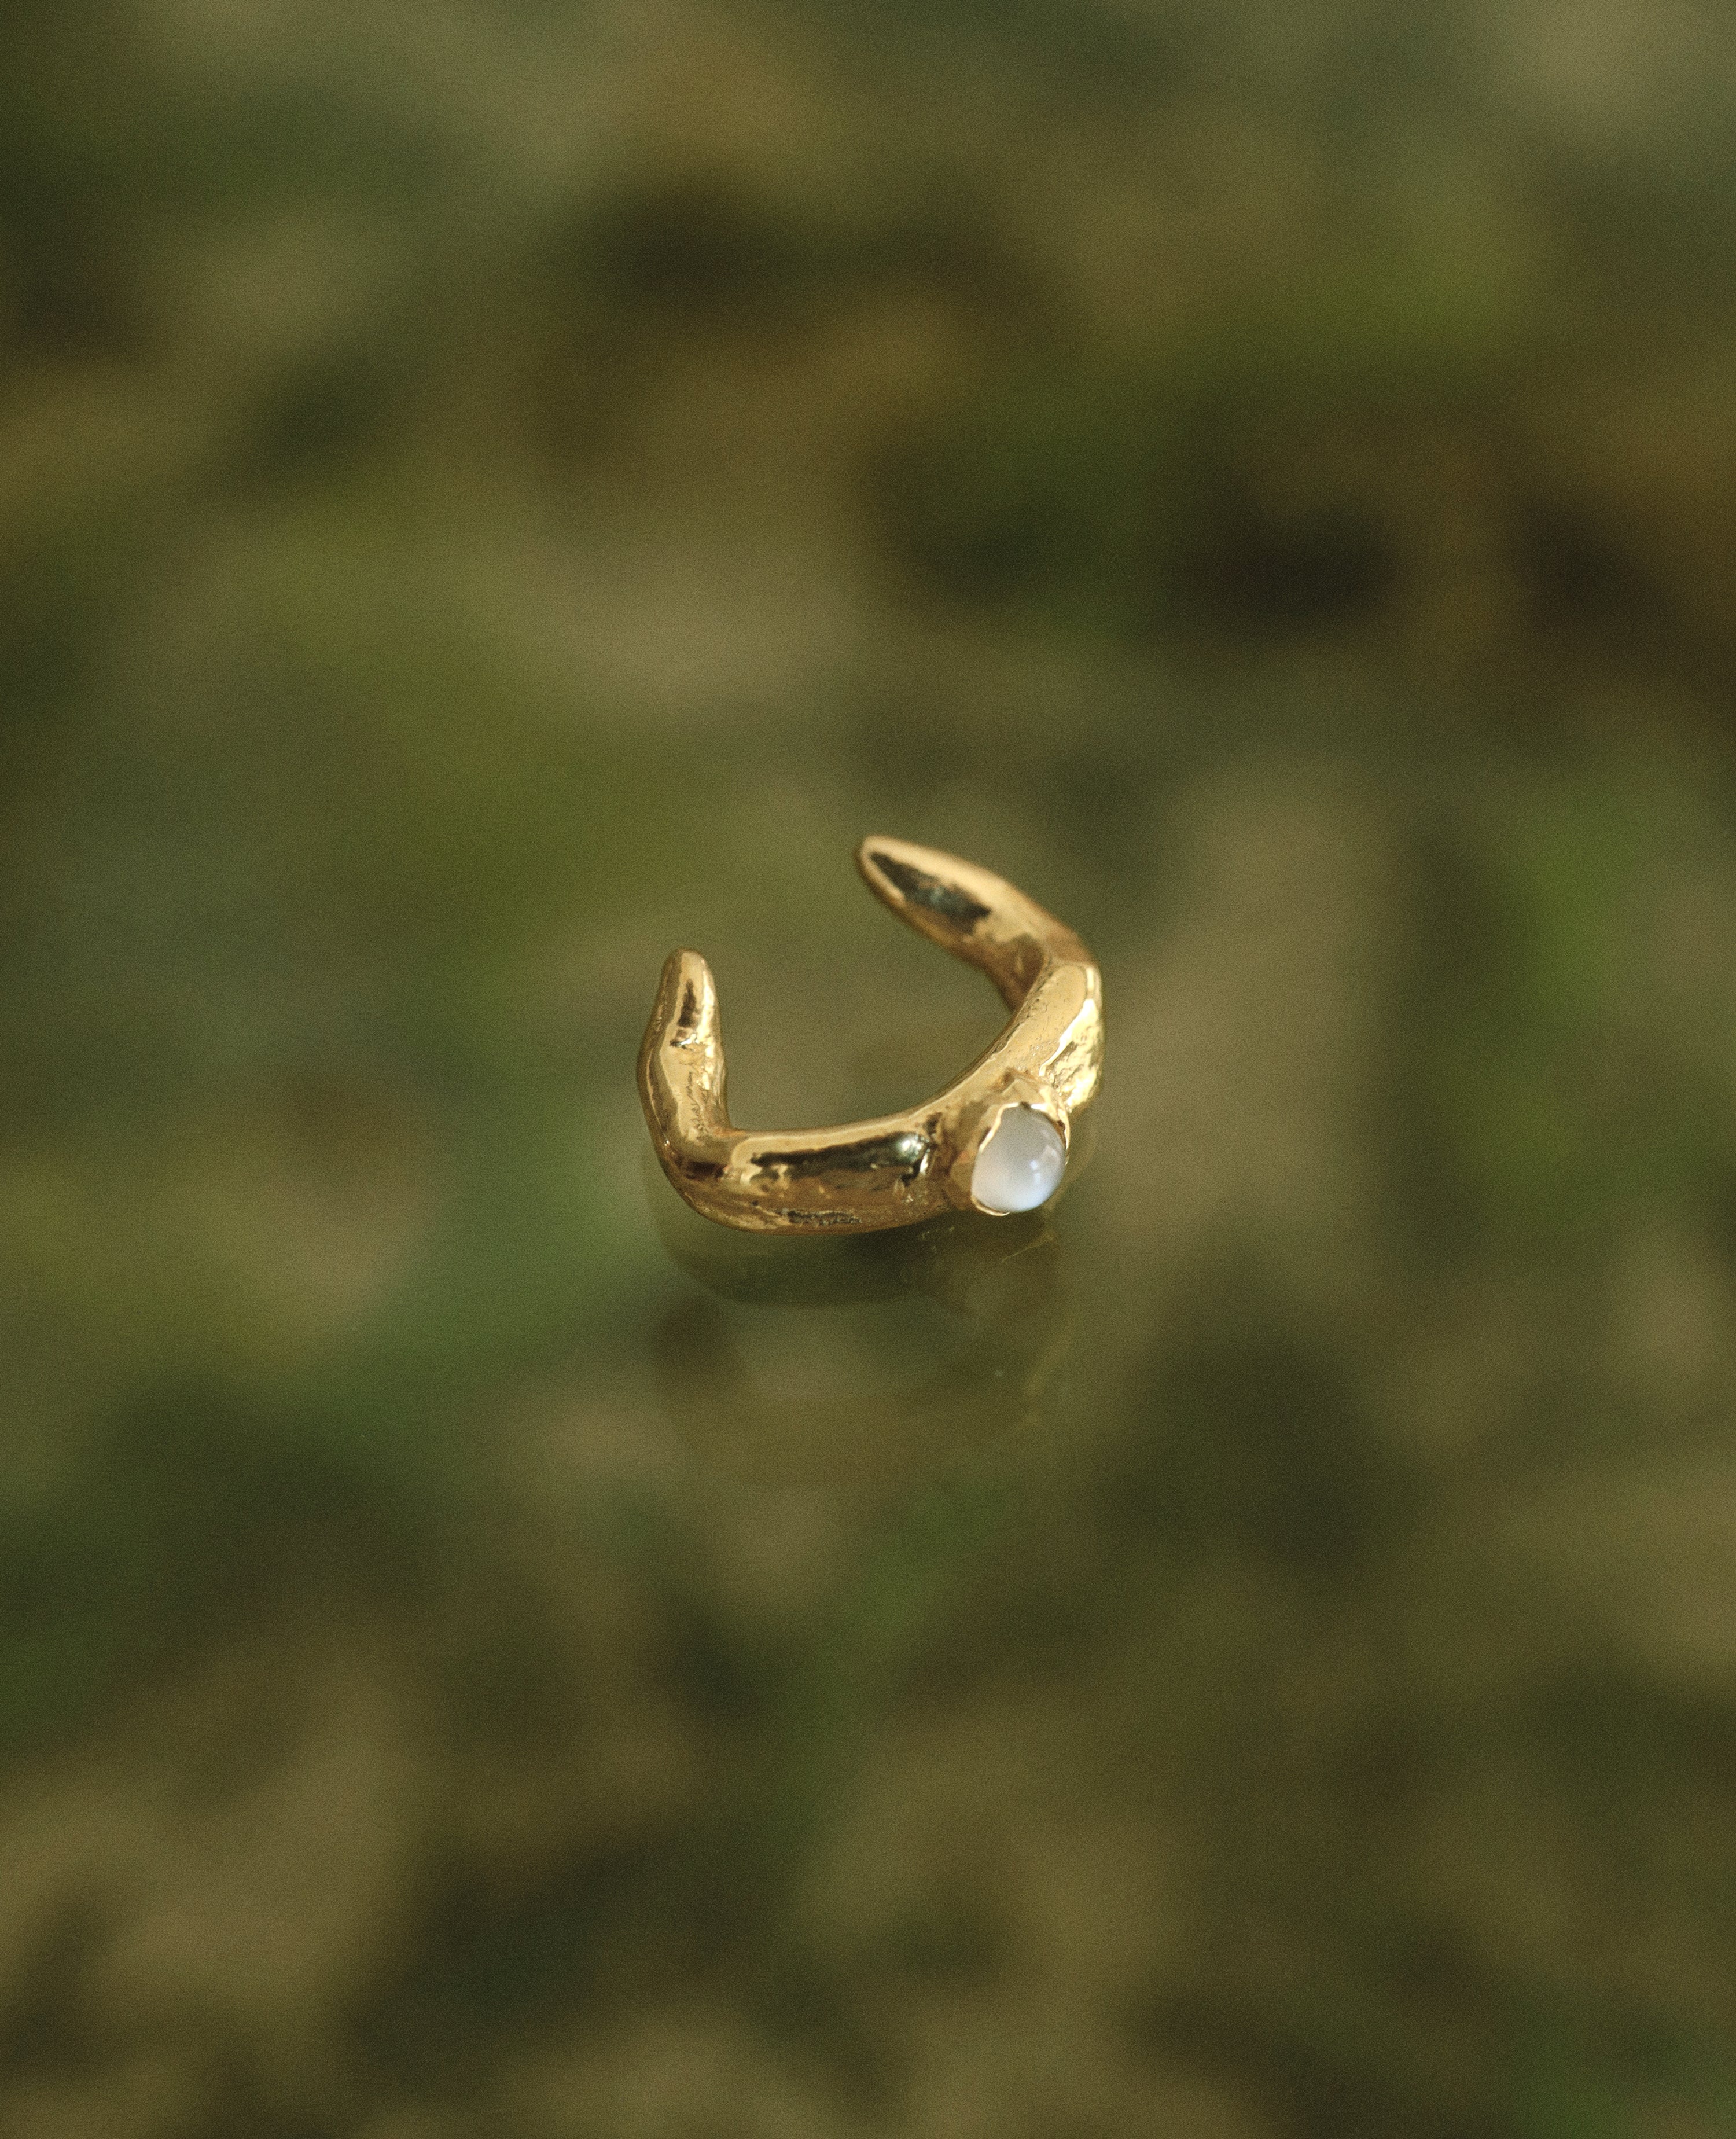 CAPRI THORNS // golden ear cuff - ORA-C jewelry - handmade jewelry by Montreal based independent designer Caroline Pham